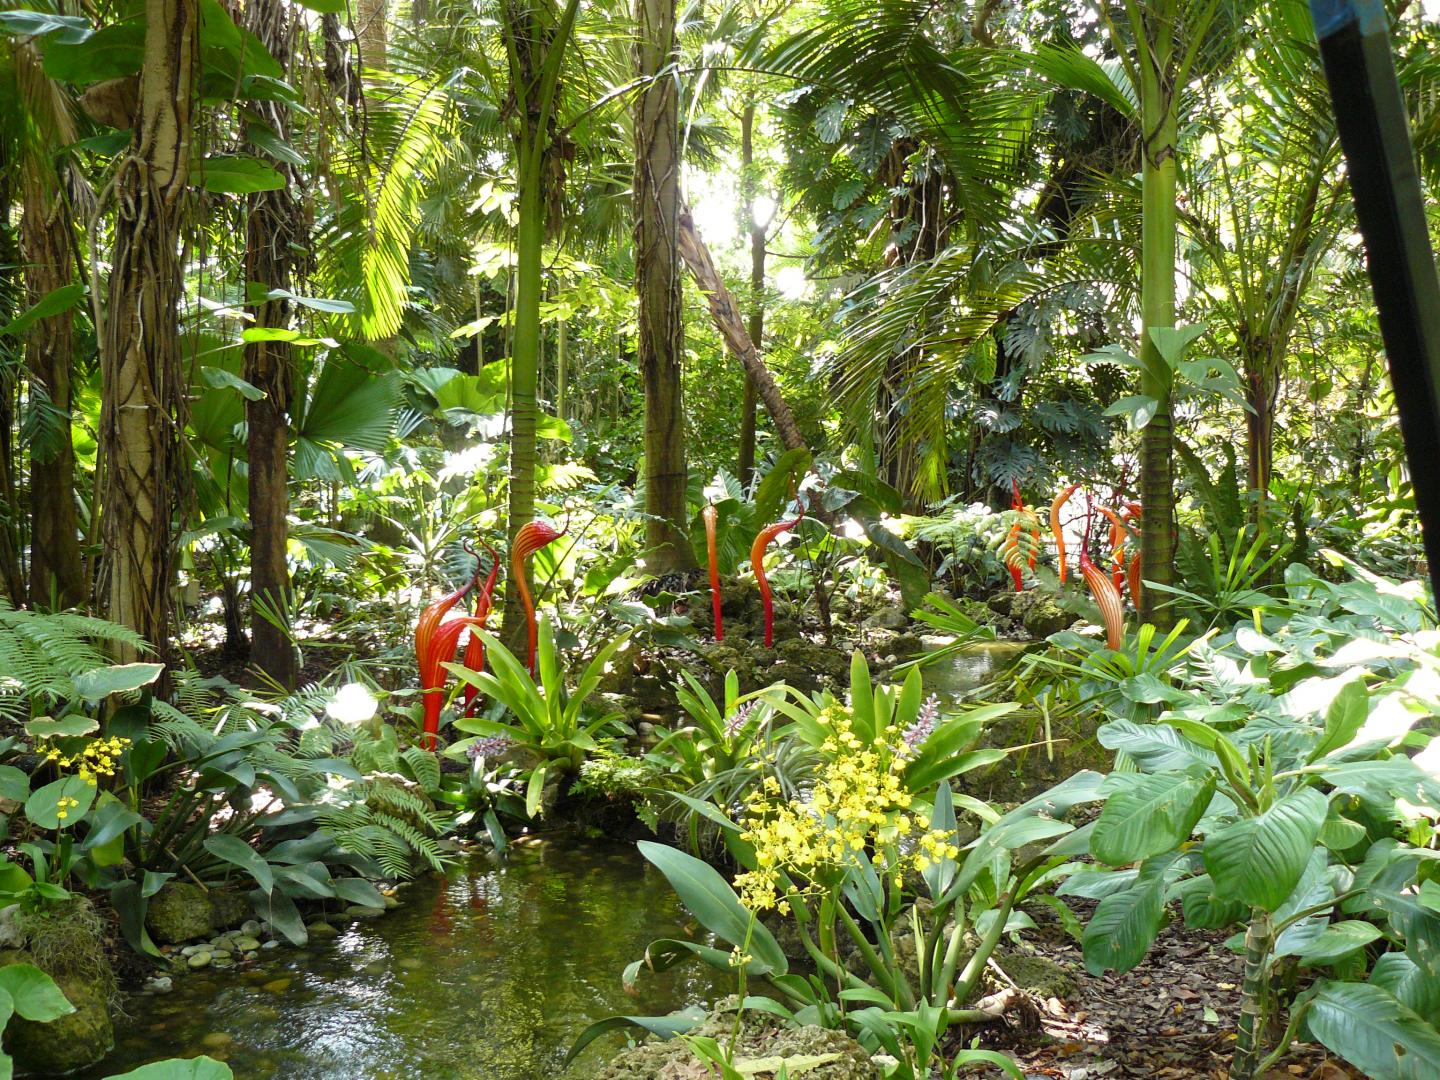 Fairchild Tropical Botanic Gar [IMAGE] EurekAlert! Science News Releases